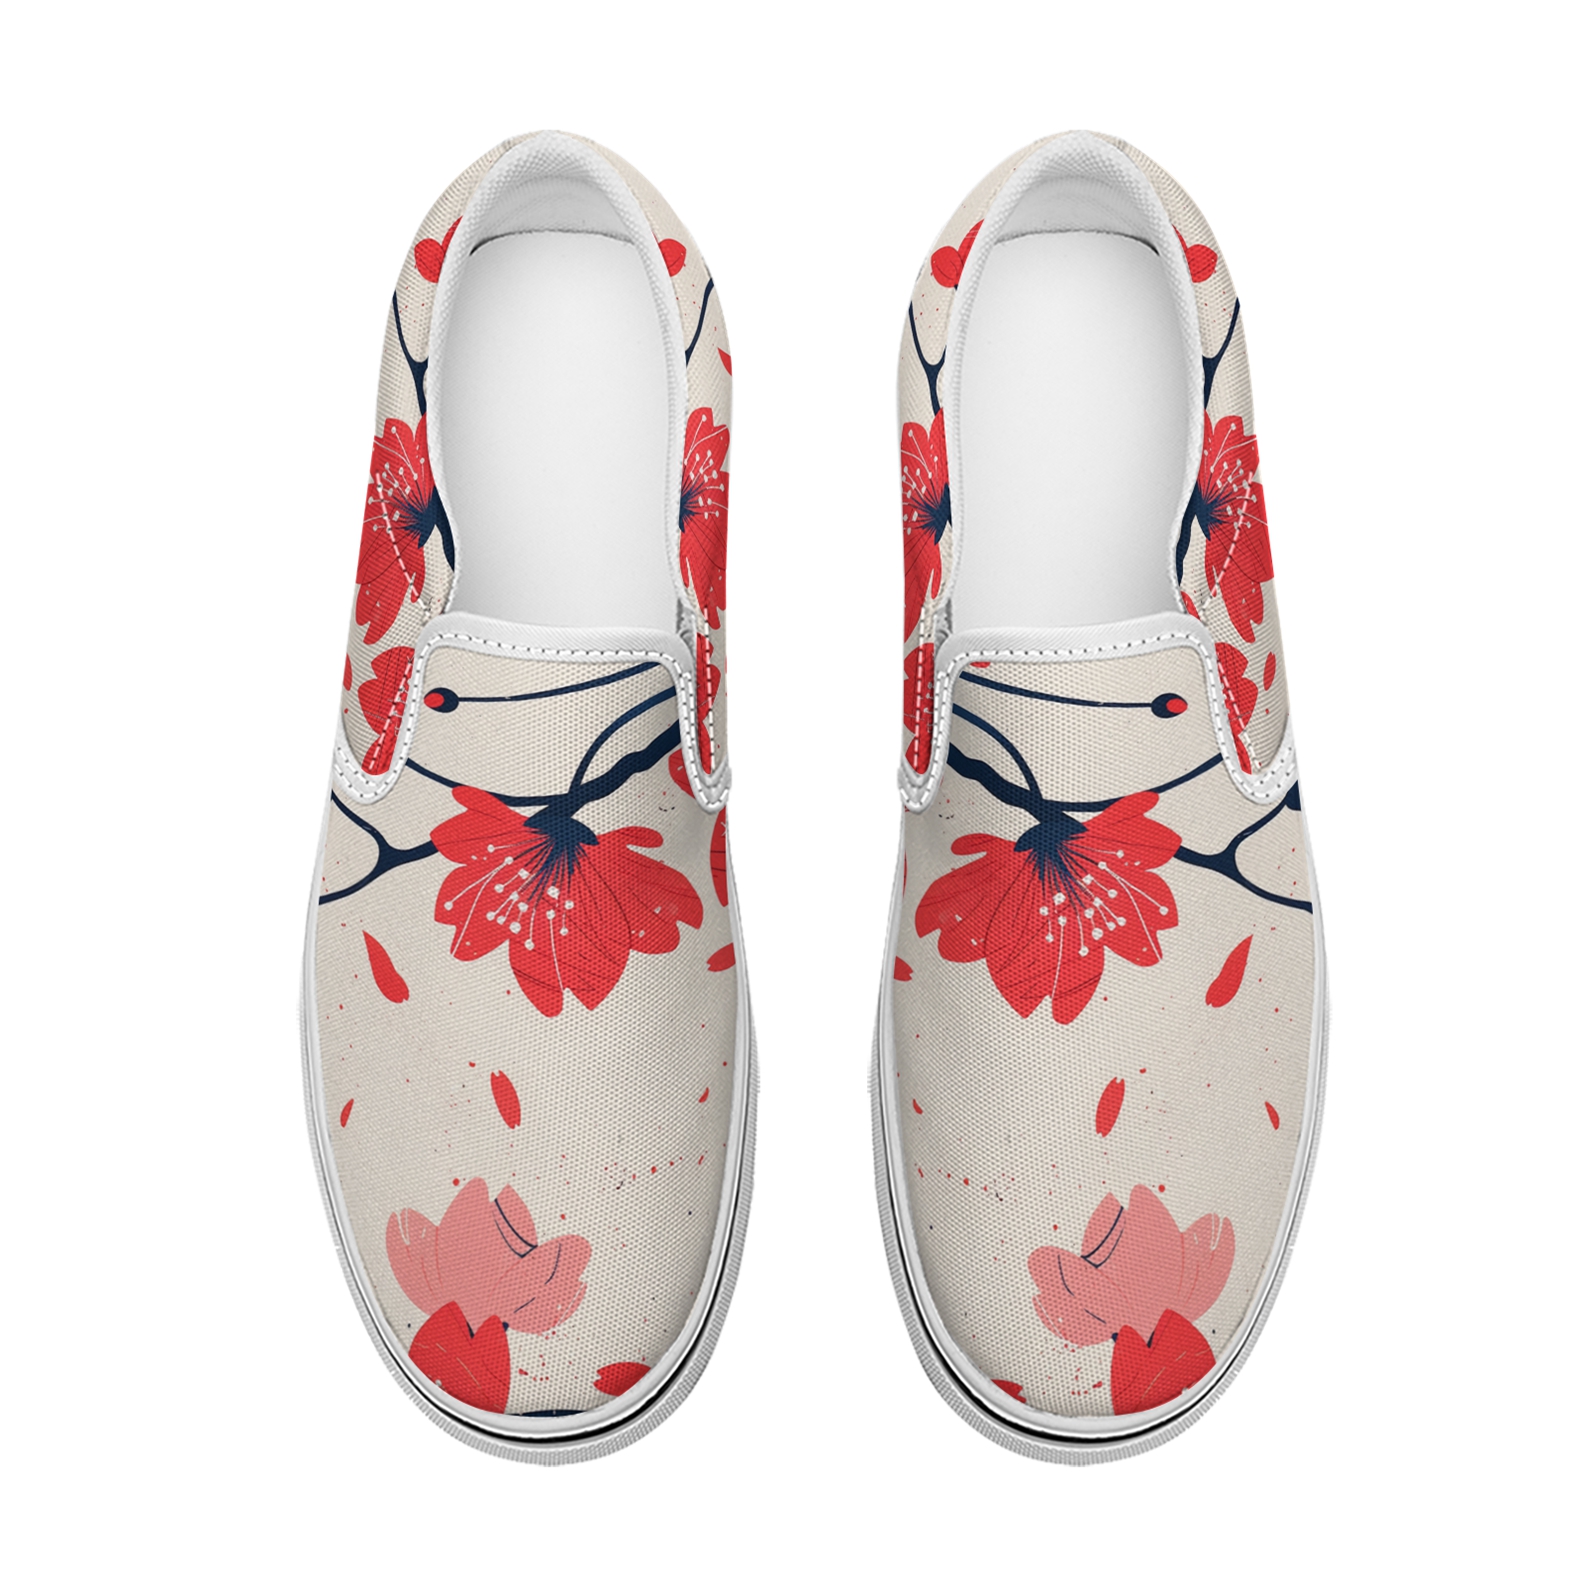 Women's Fashion cherry blossom print Sneaker Low Top Casual Walking Shoes Classic Comfort Flat Fashion Sneakers